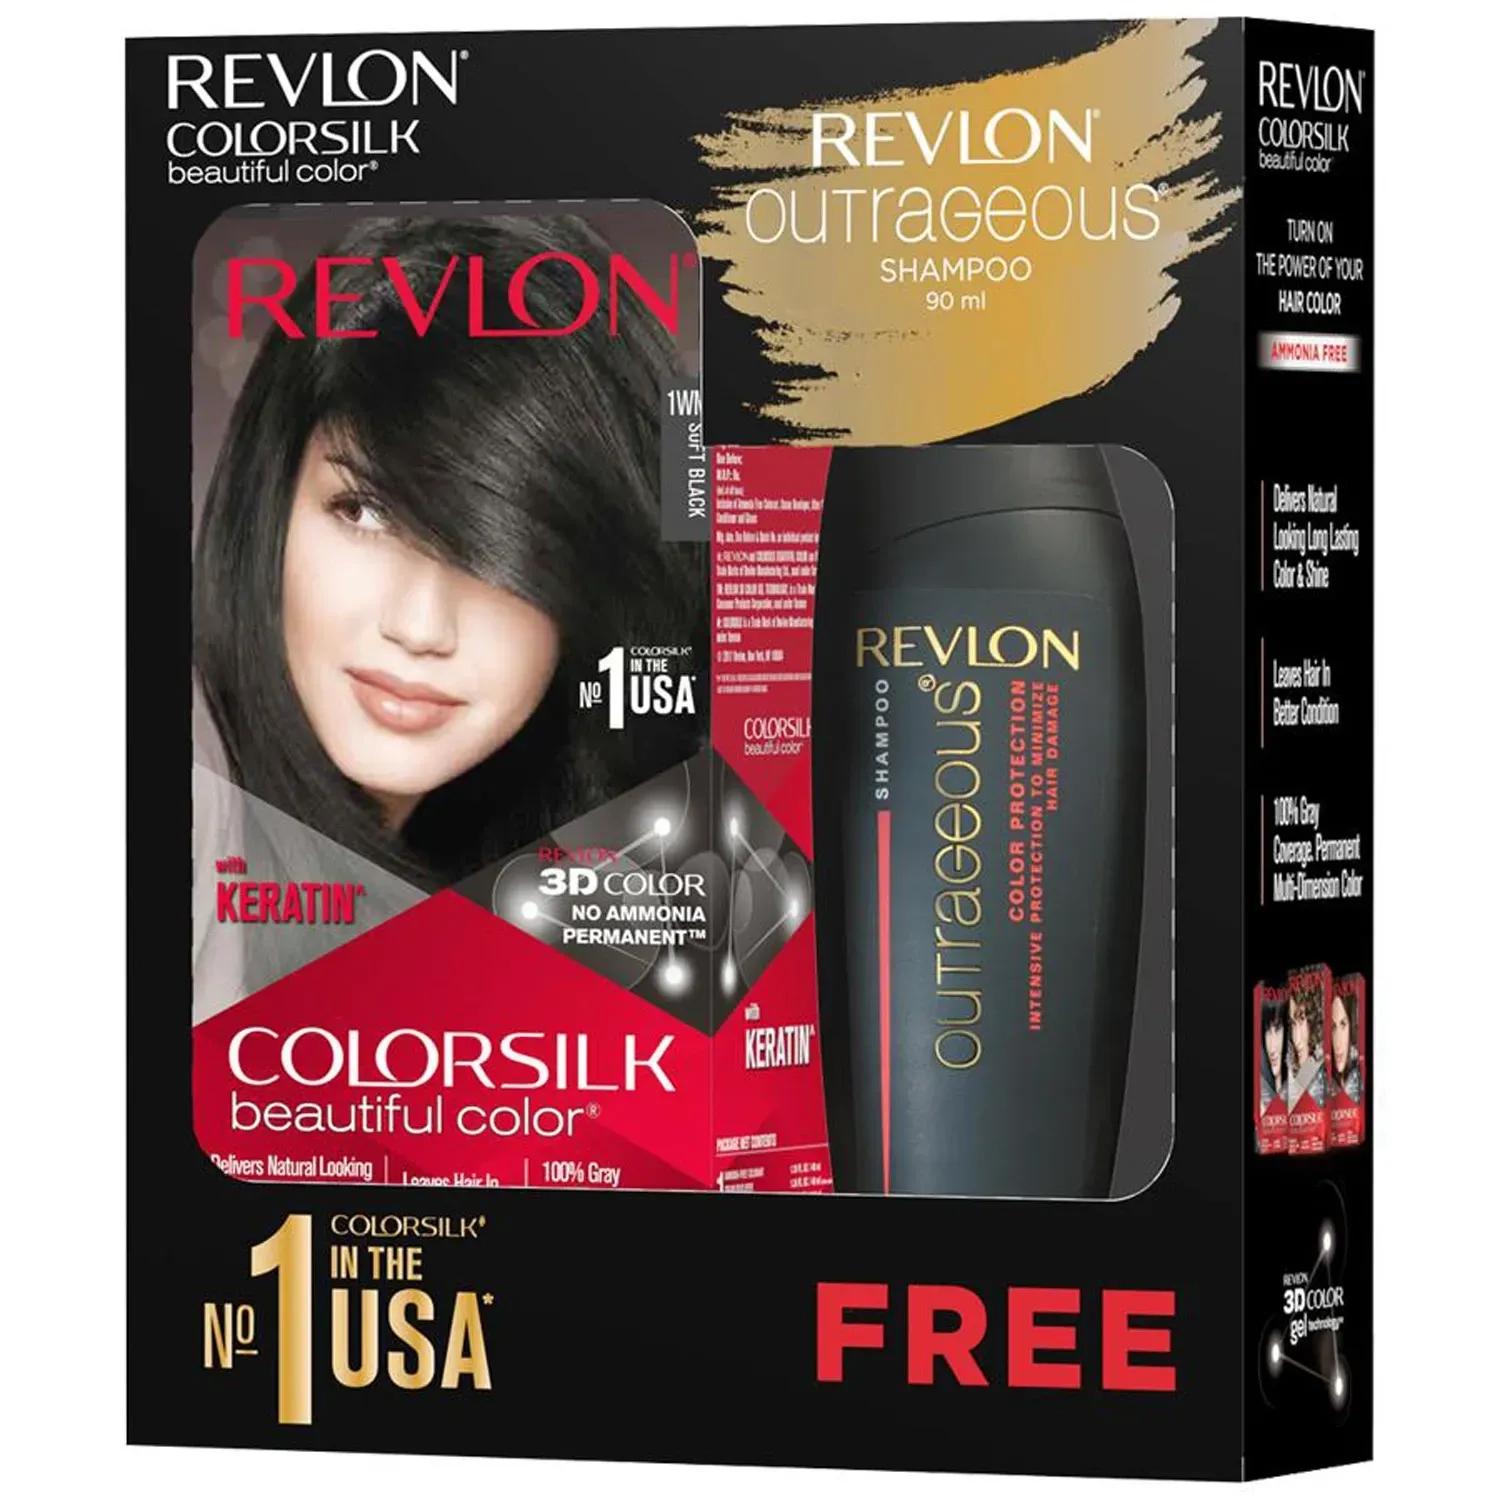 revlon colorsilk beautiful hair color with keratin + free shampoo - 1wn soft black (91.8ml)